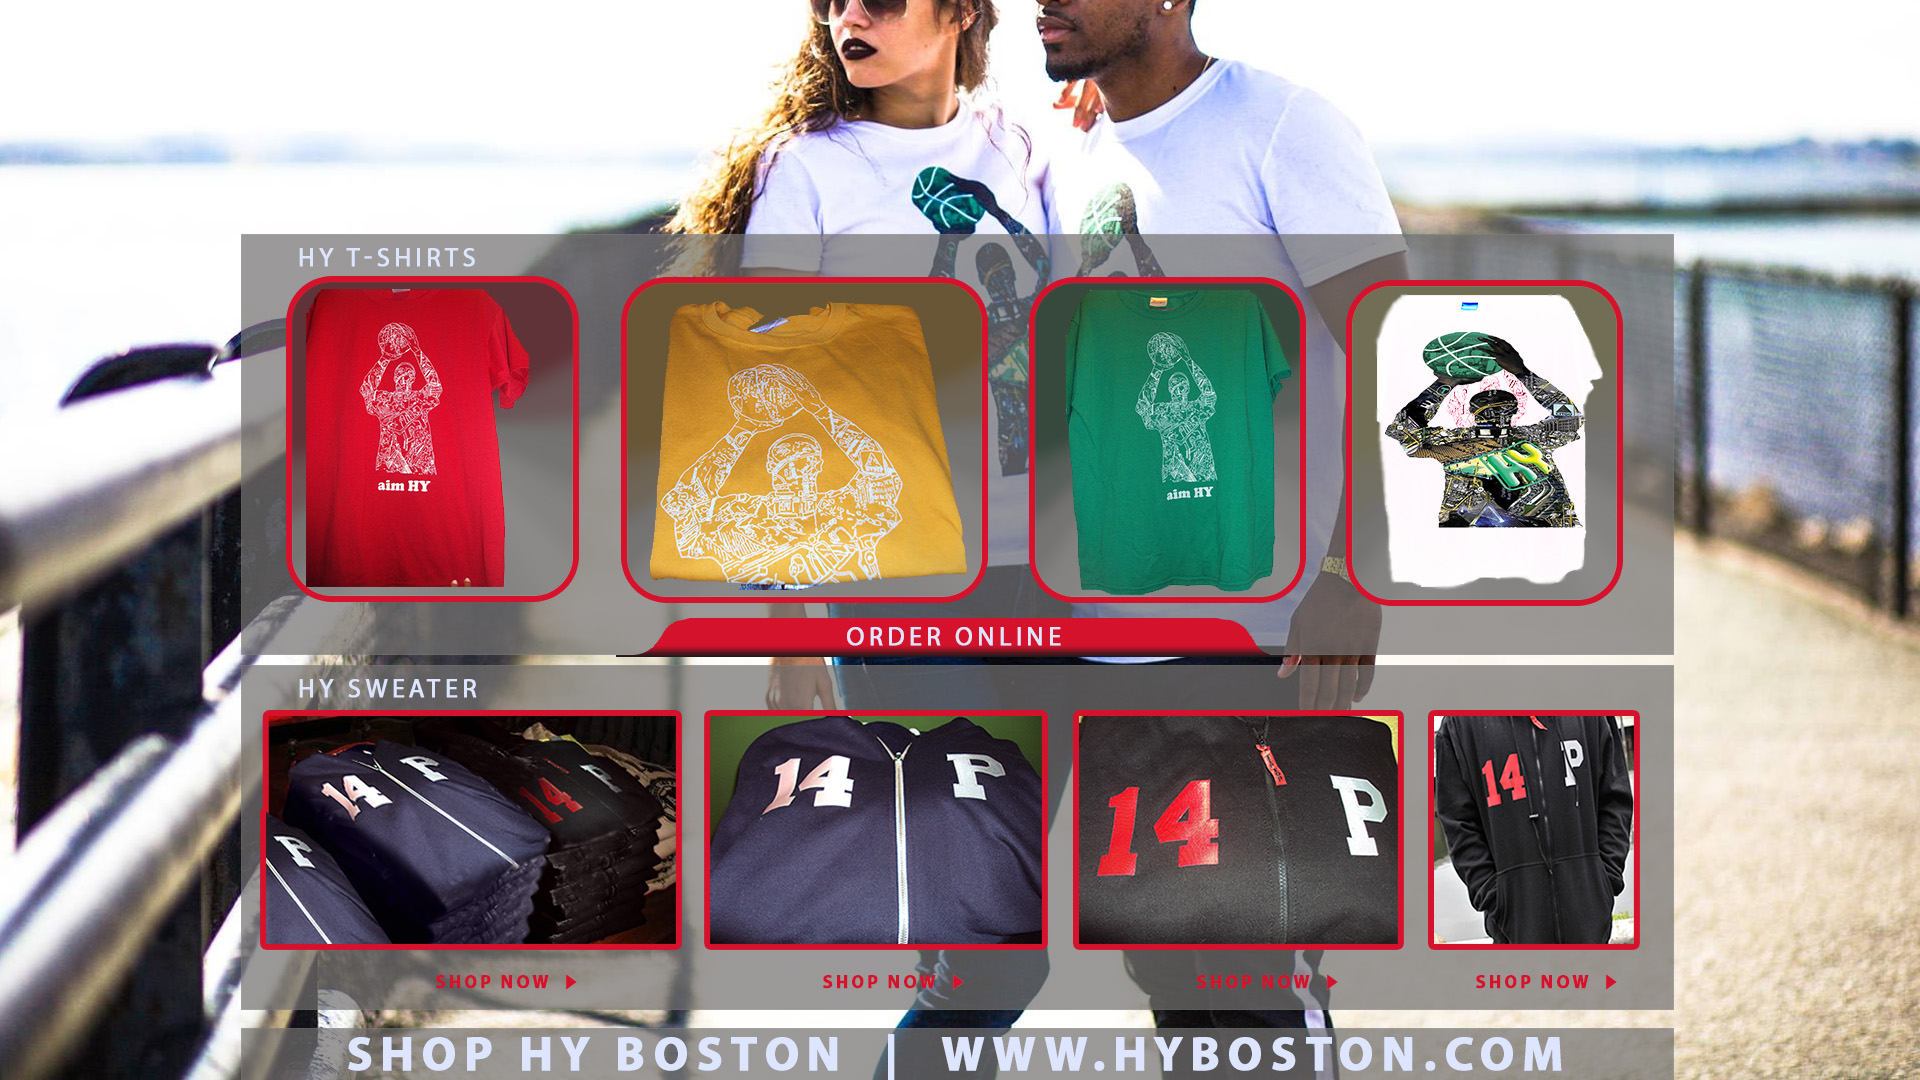 Buy Local, Buy HY Boston